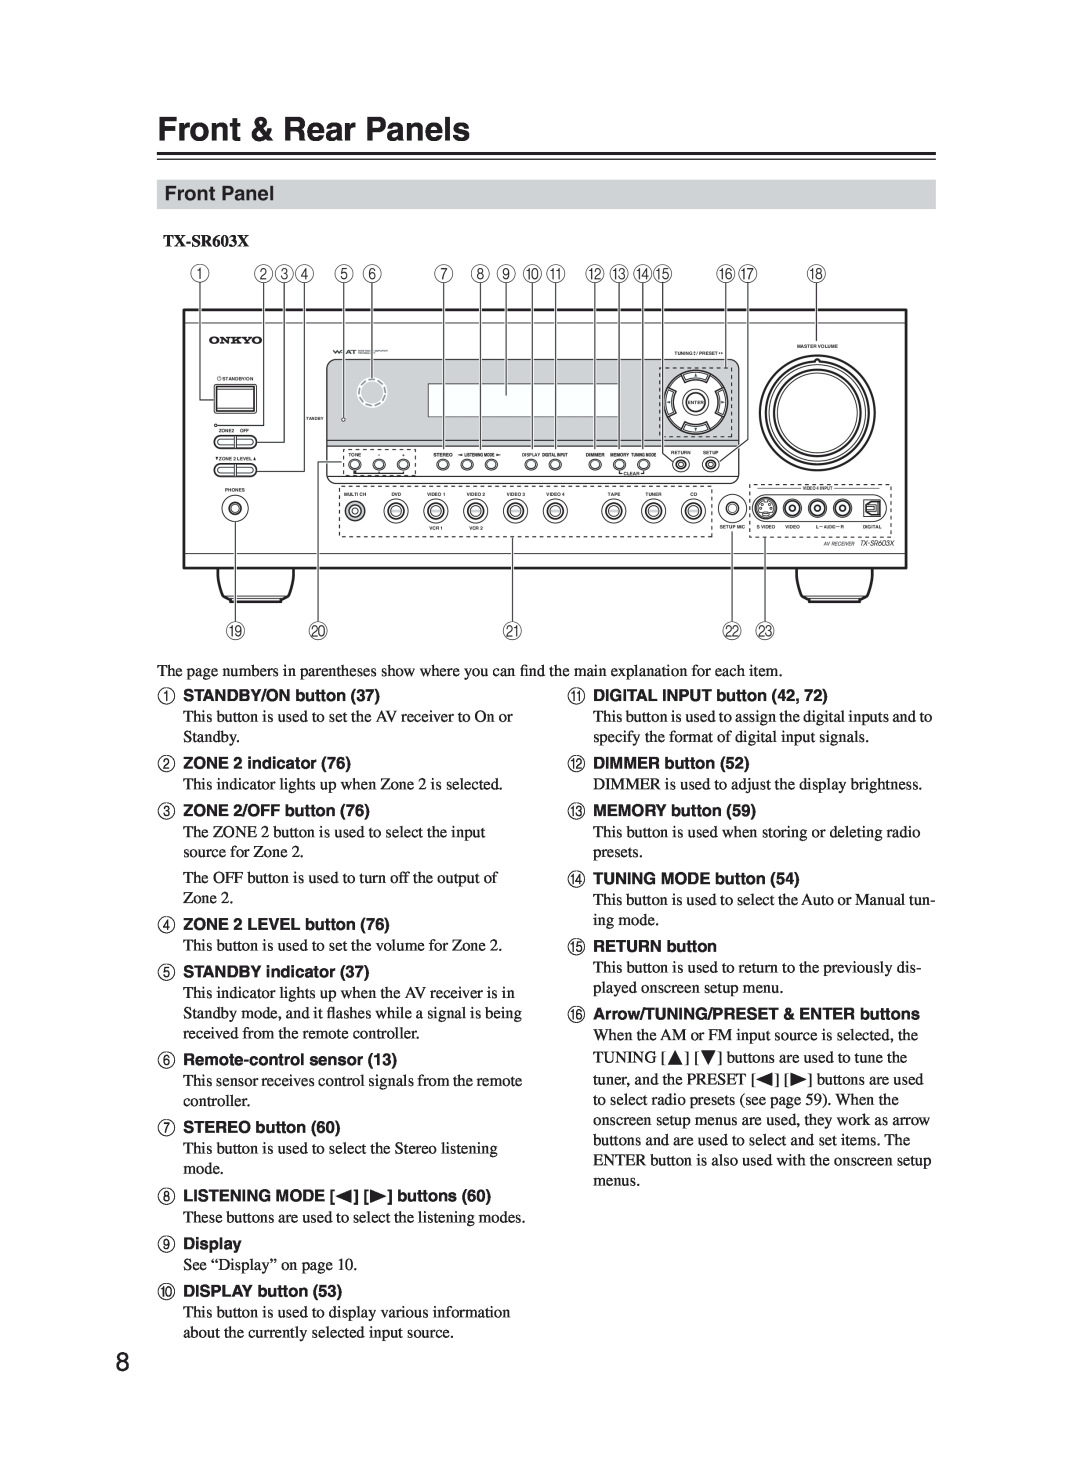 Onkyo TX-SR603X instruction manual Front & Rear Panels, Front Panel, 1 234 5 6 7 8 9 0A B CDE FG H, I J K L M 